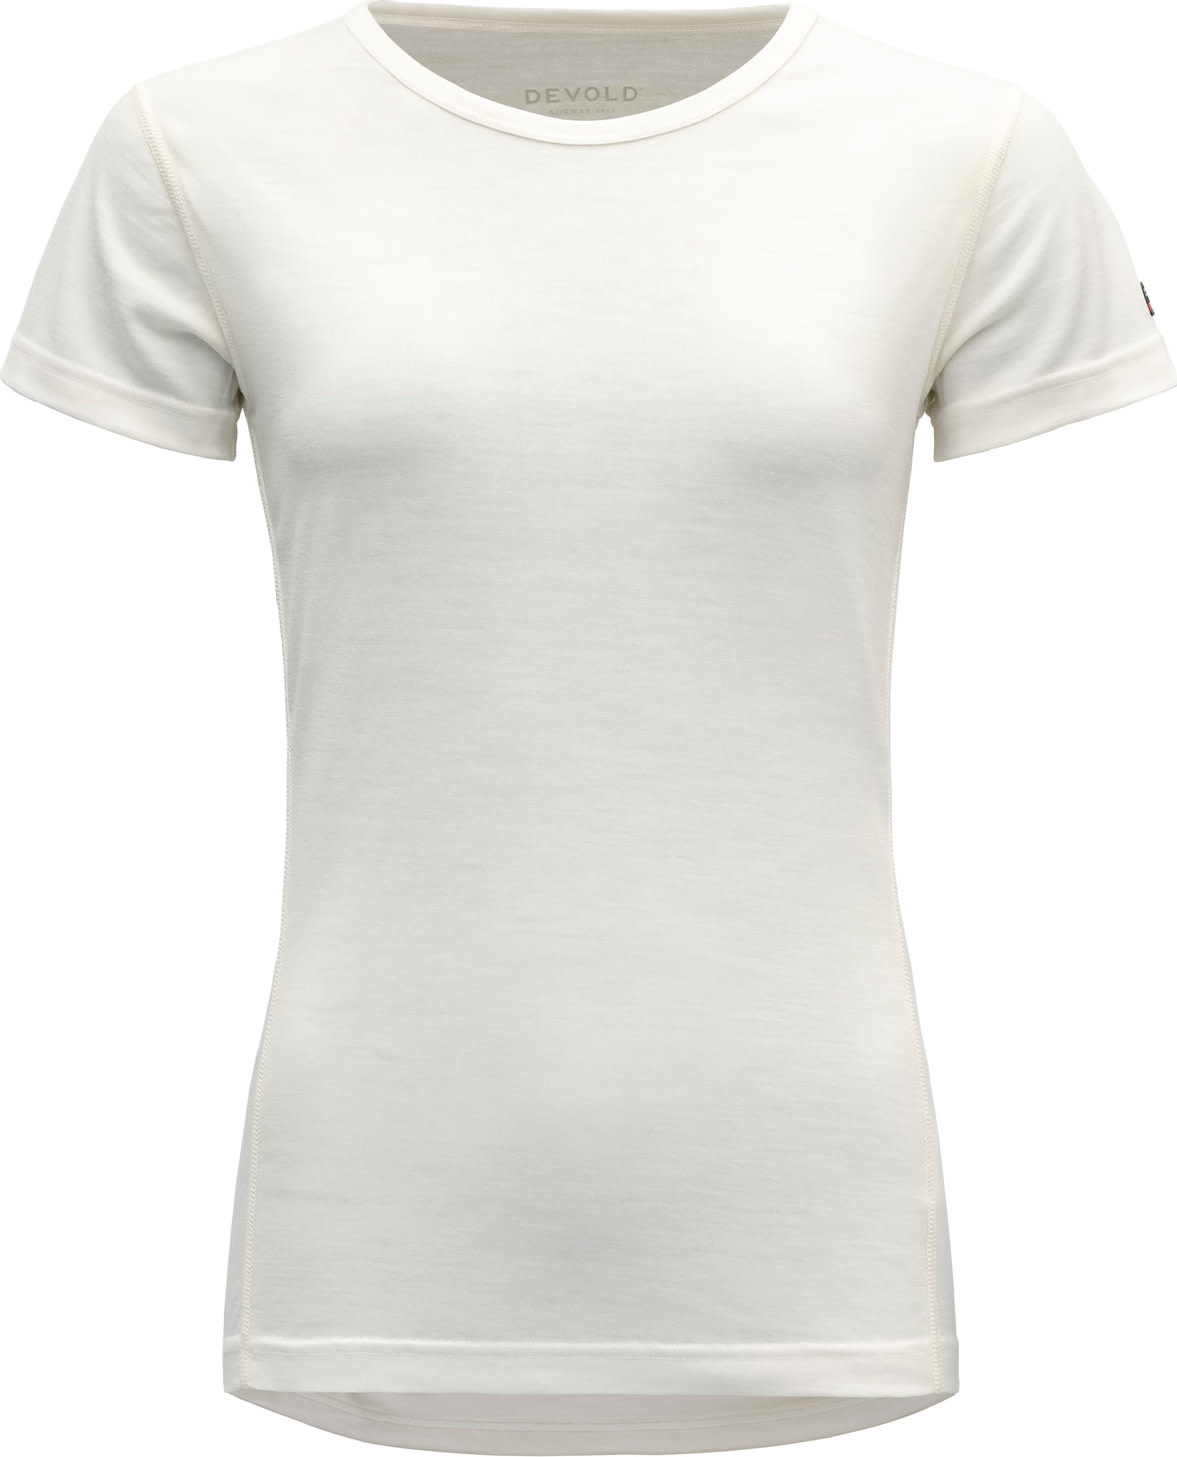 Devold Women’s Breeze Merino 150 T-Shirt WHITE